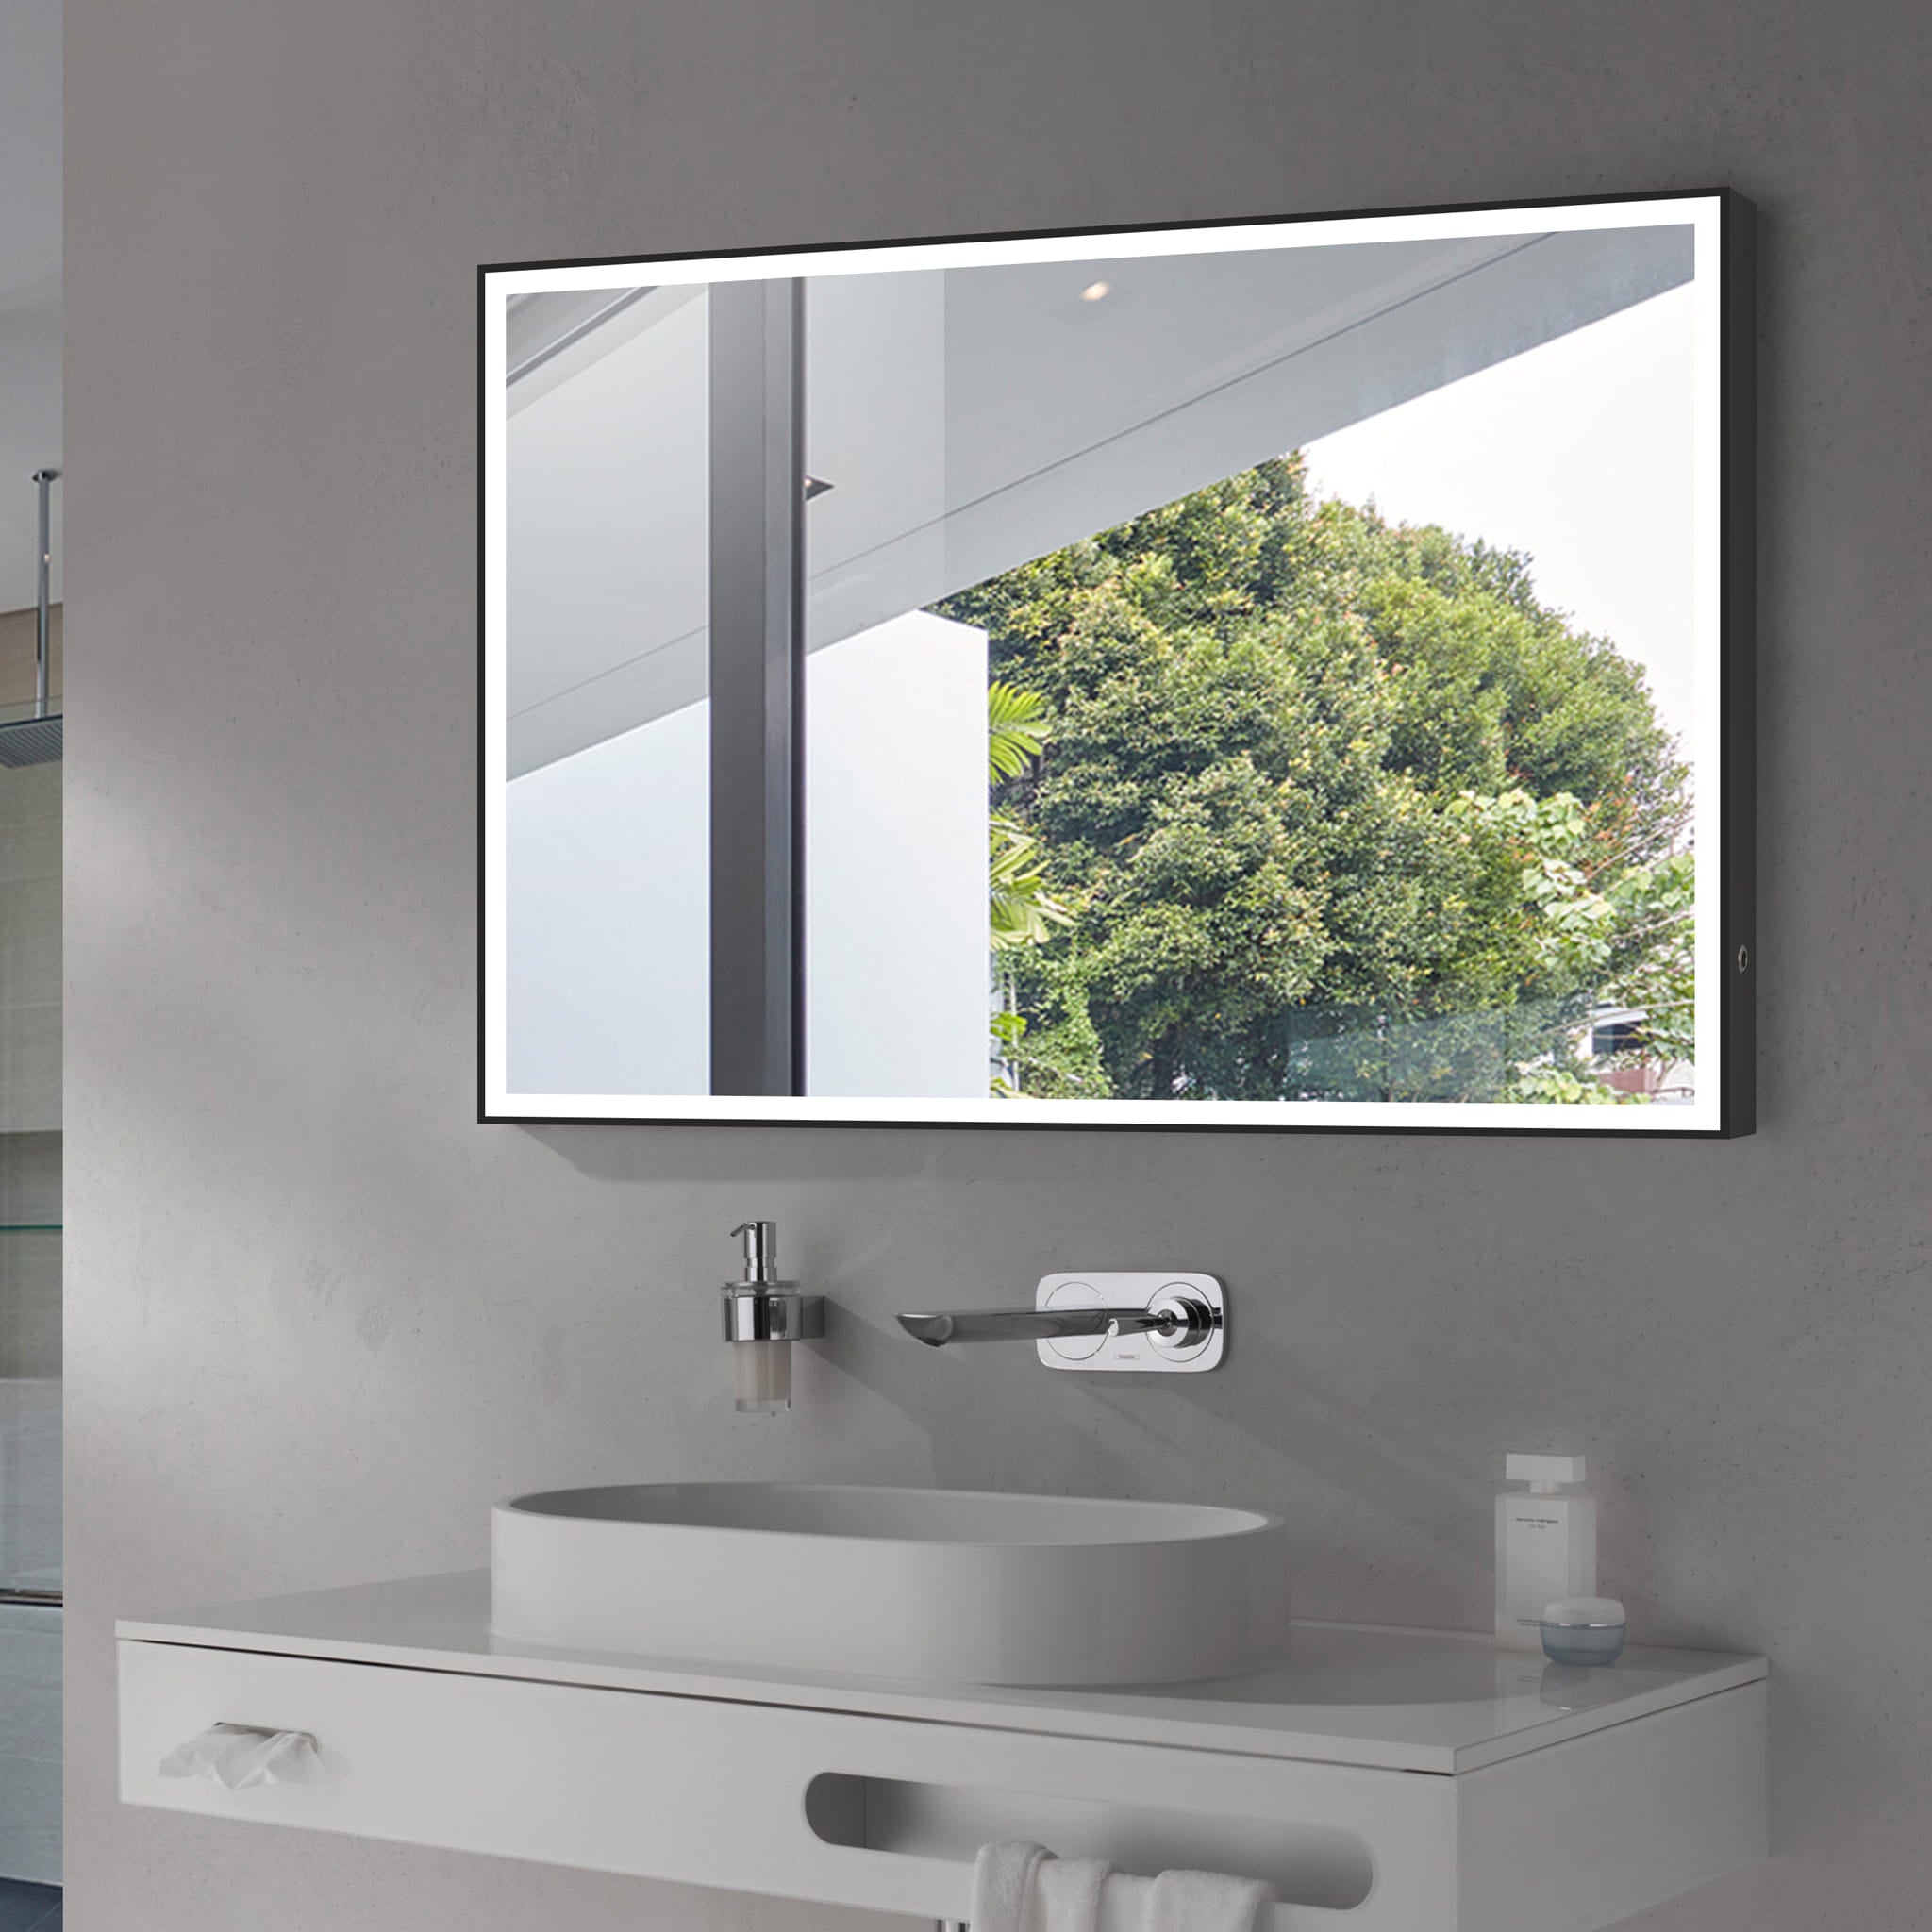 Aquamoon 2575 LED Bathroom Mirror 31" x 27.5" Wall Mounted Side Switch with Black Frame